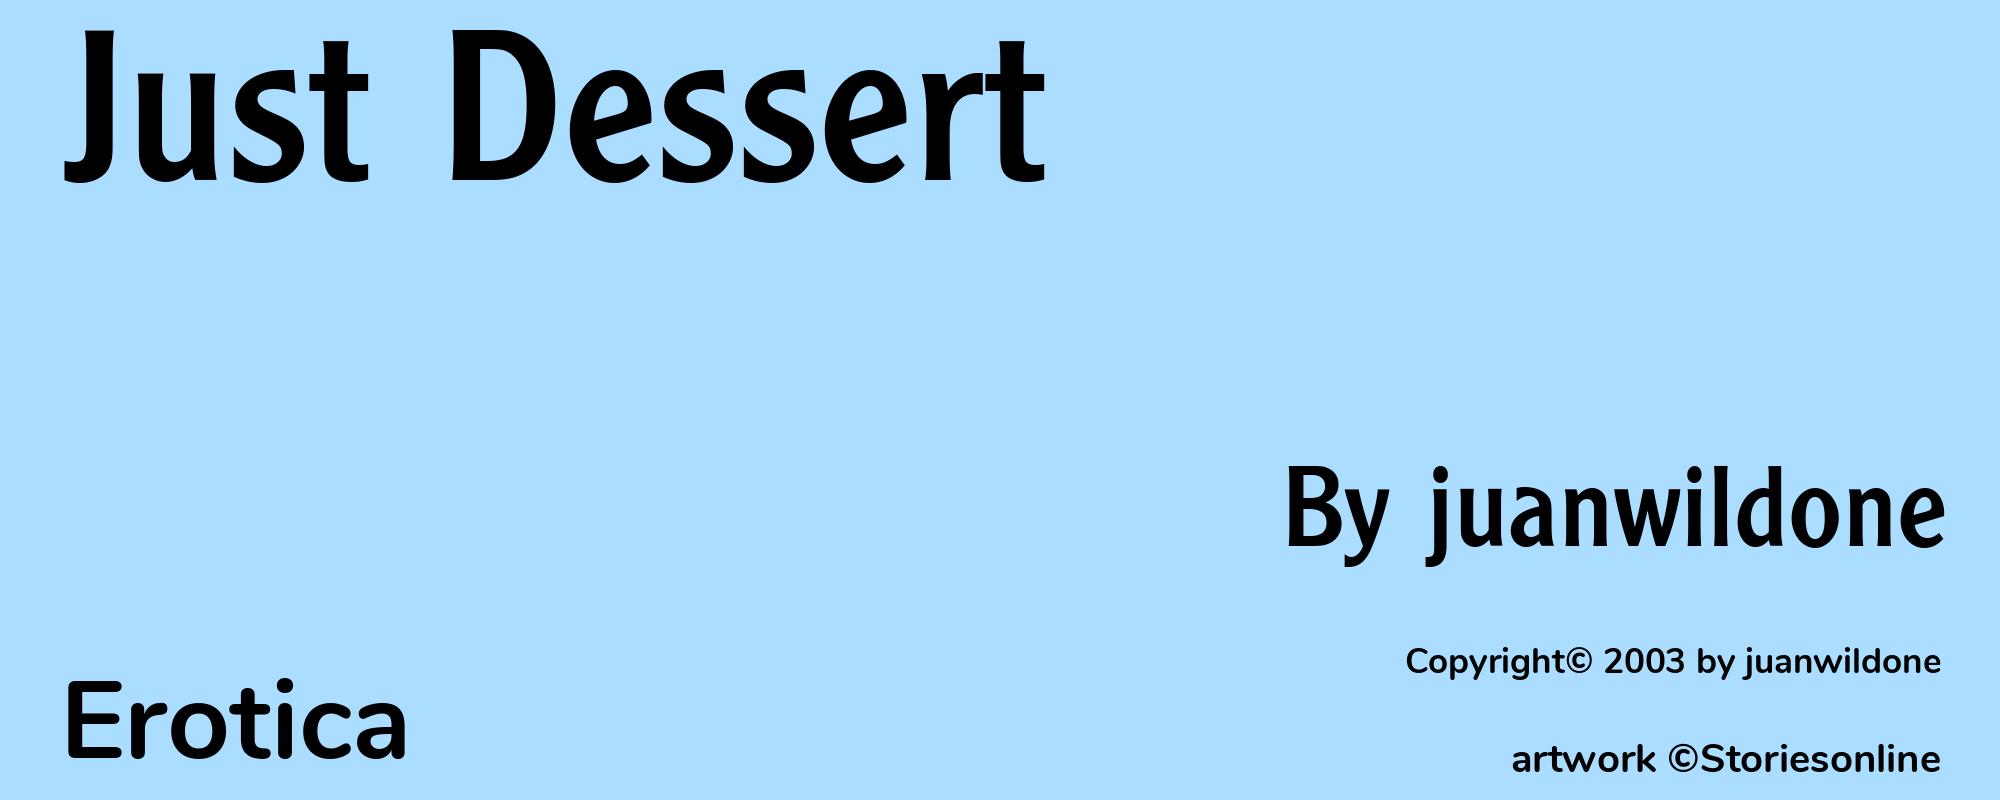 Just Dessert - Cover